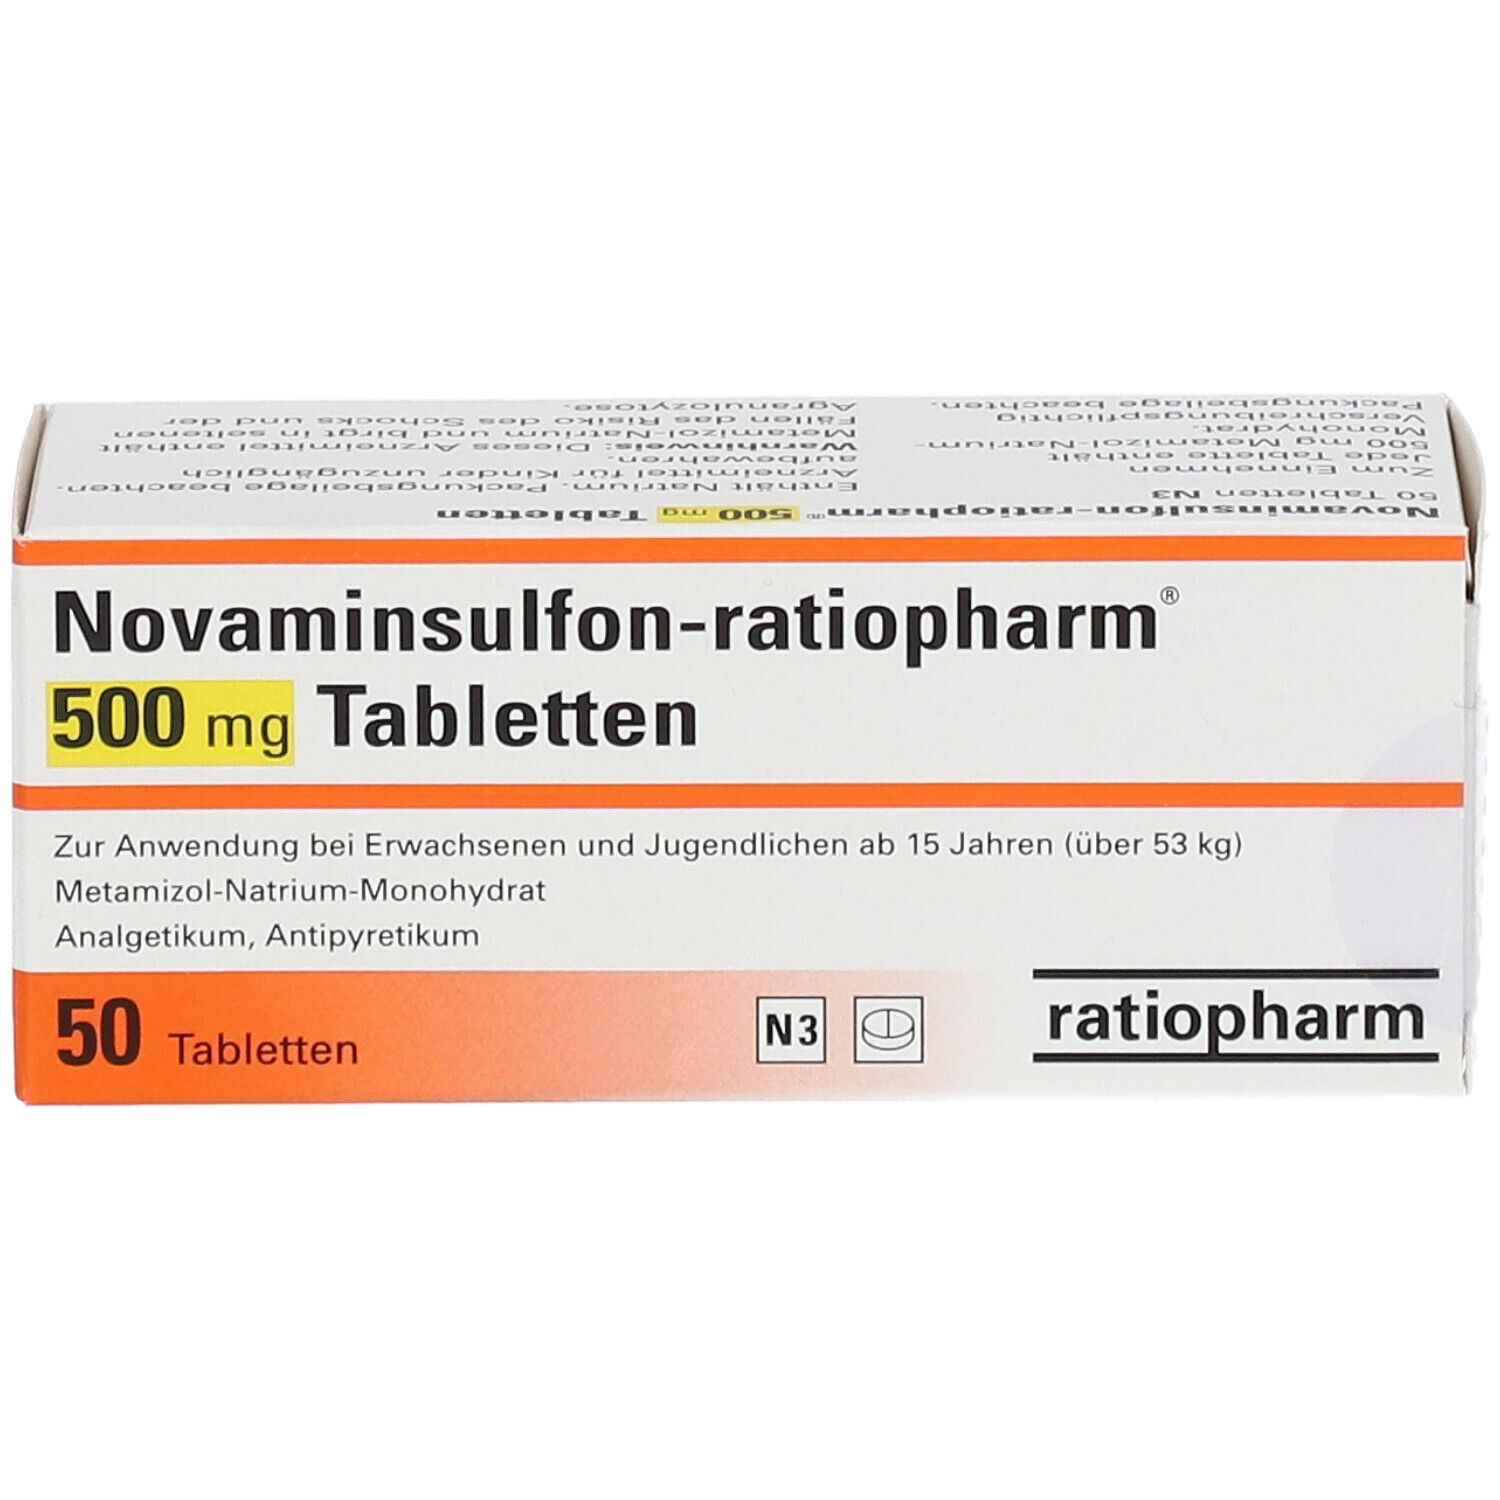 Novaminsulfon-ratiopharm ® 500 mg 50 St - shop-apotheke.com